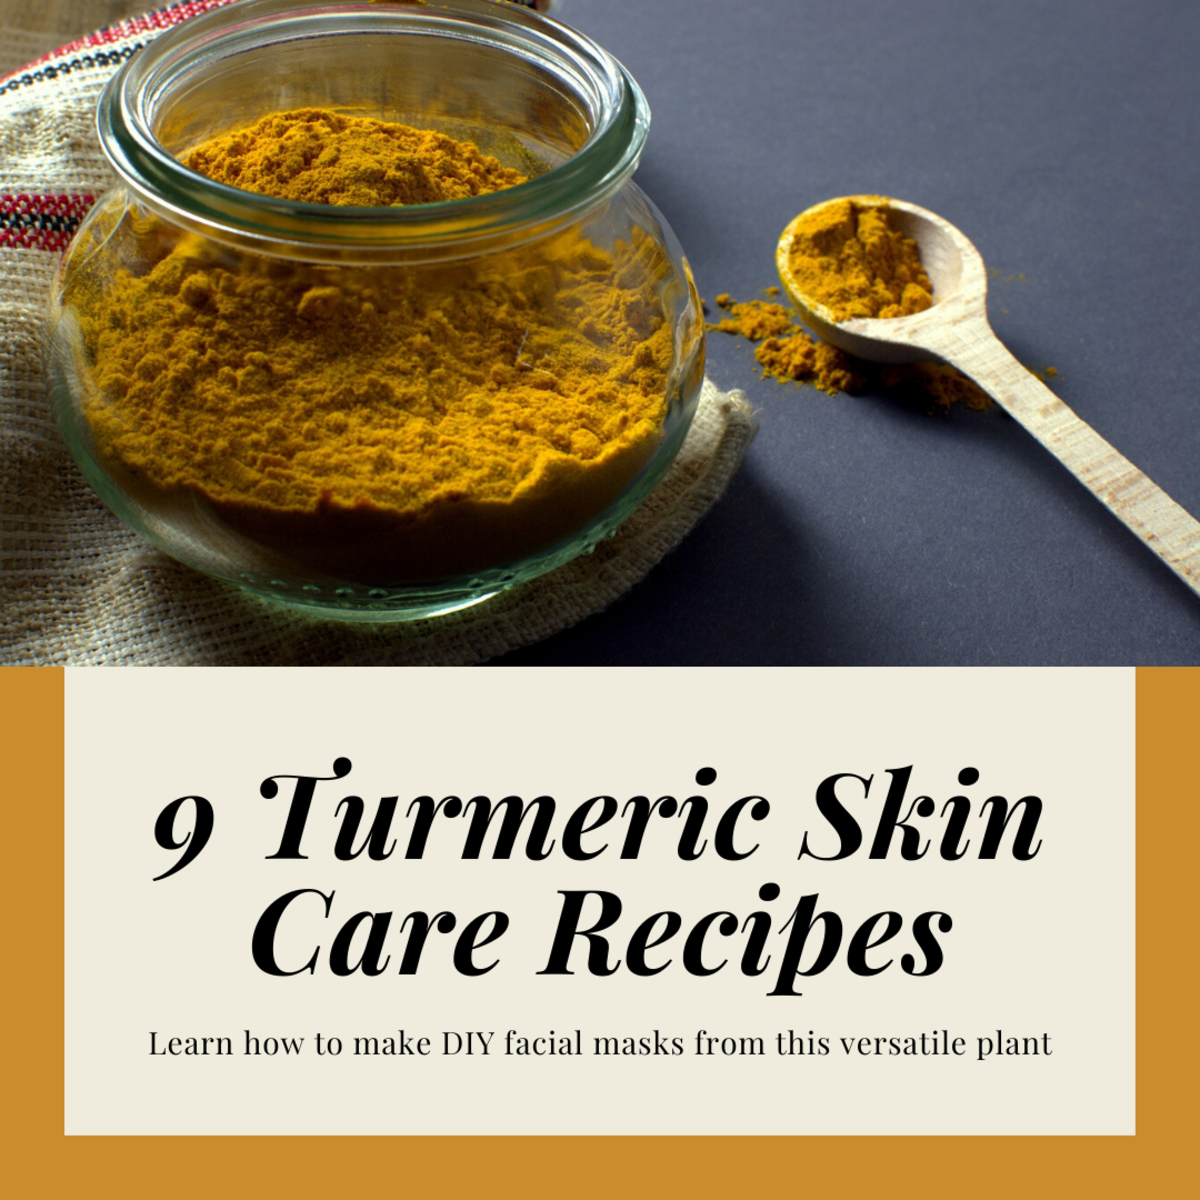 9 Homemade Facial Mask and Skin Care Recipes Using Turmeric